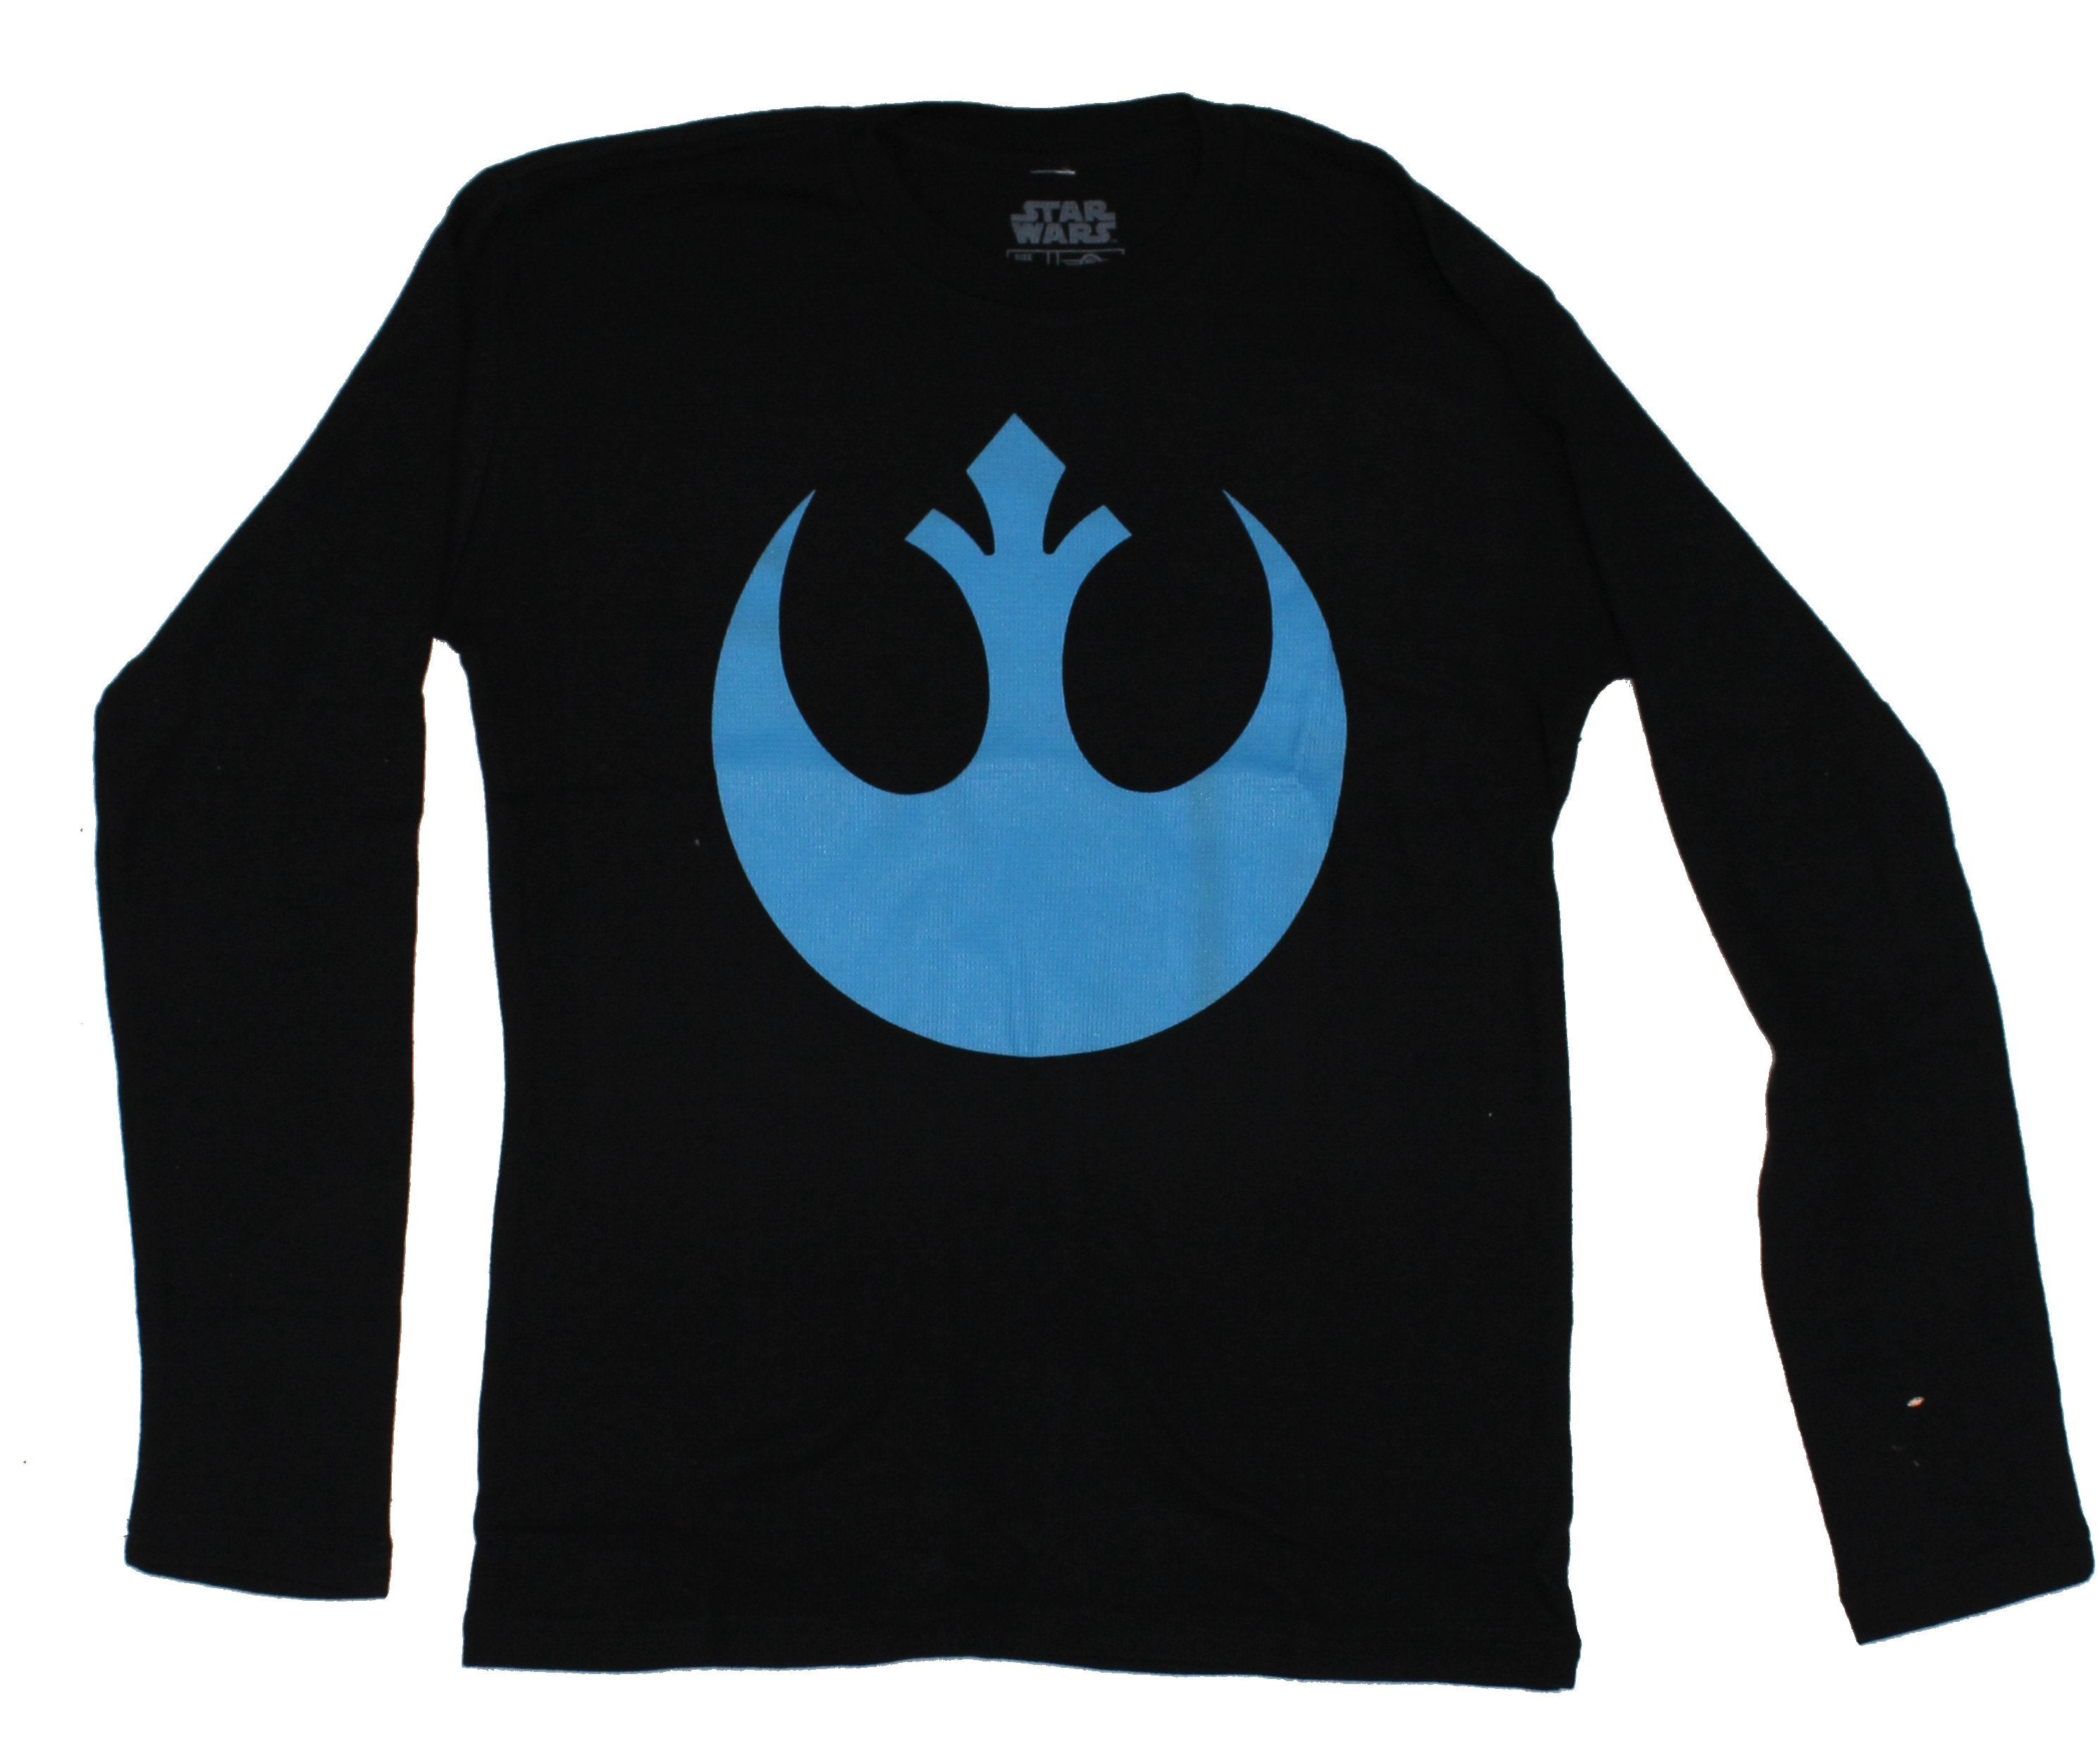 Star Wars Mens Thermal Shirt - Blue Republic Emblem (Small) black